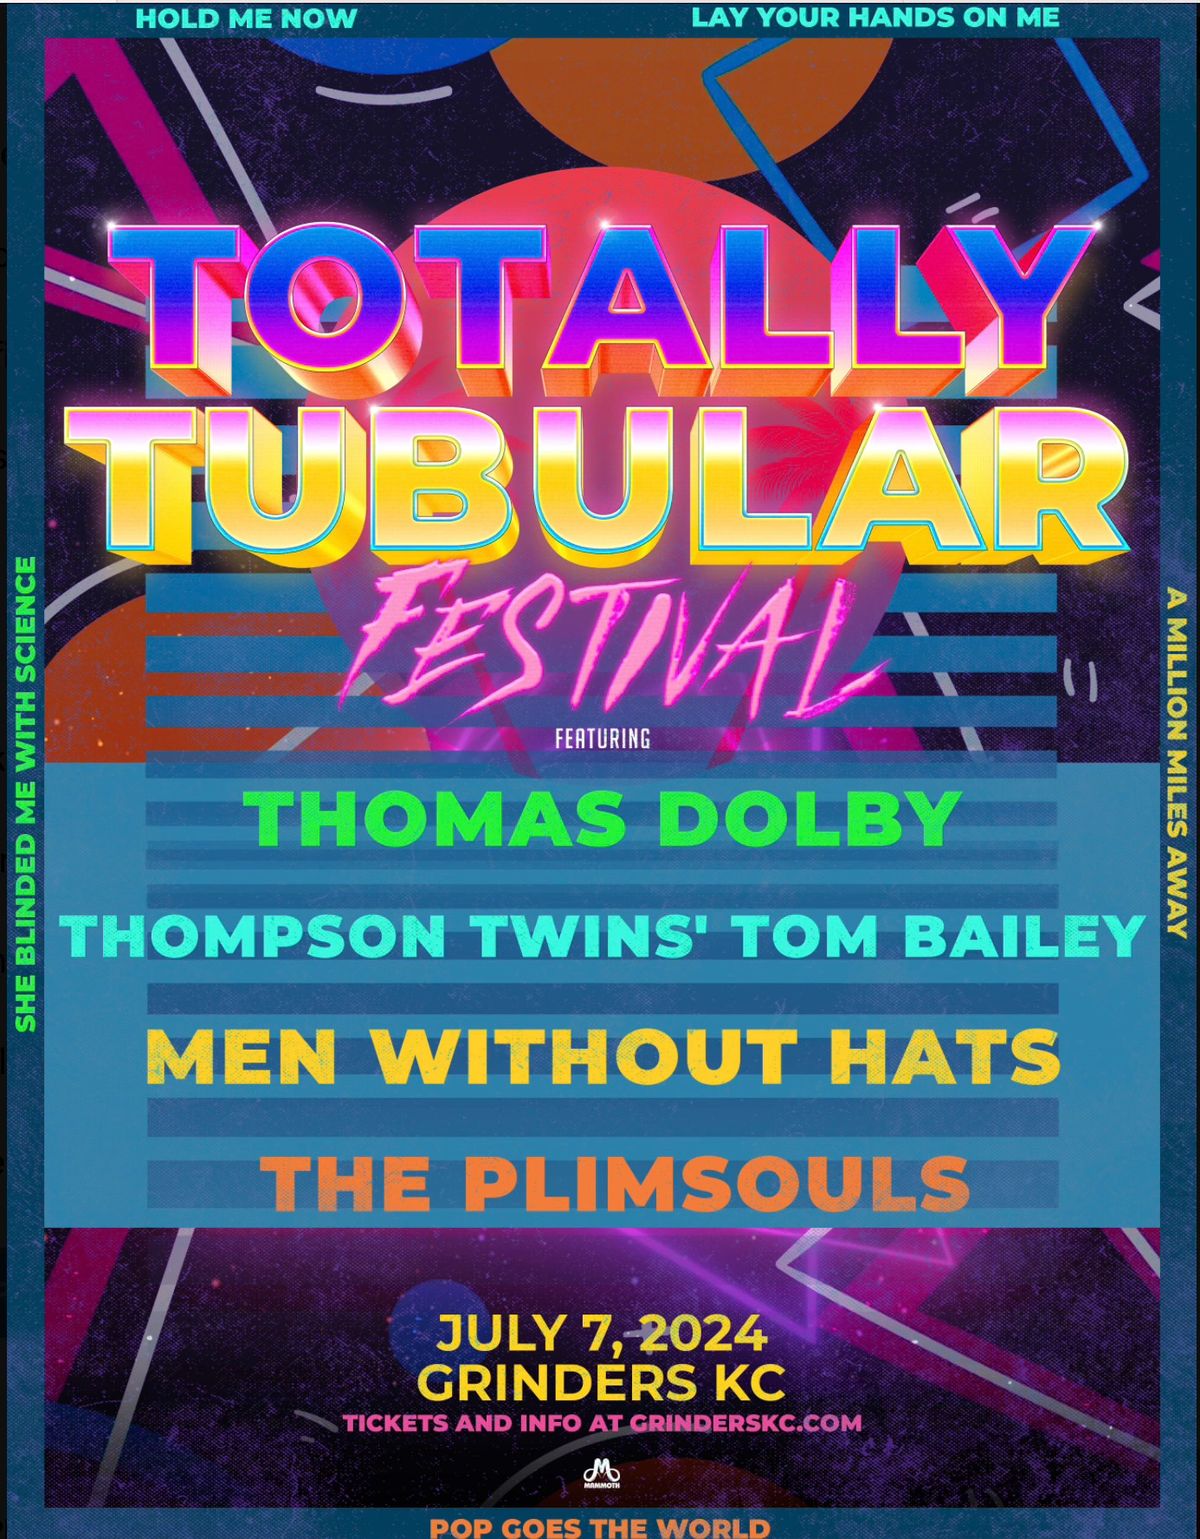 THE PLIMSOULS' EDDIE MUNOZ - LIVE! @ Totally Tubular Festival Show In KC, MO!